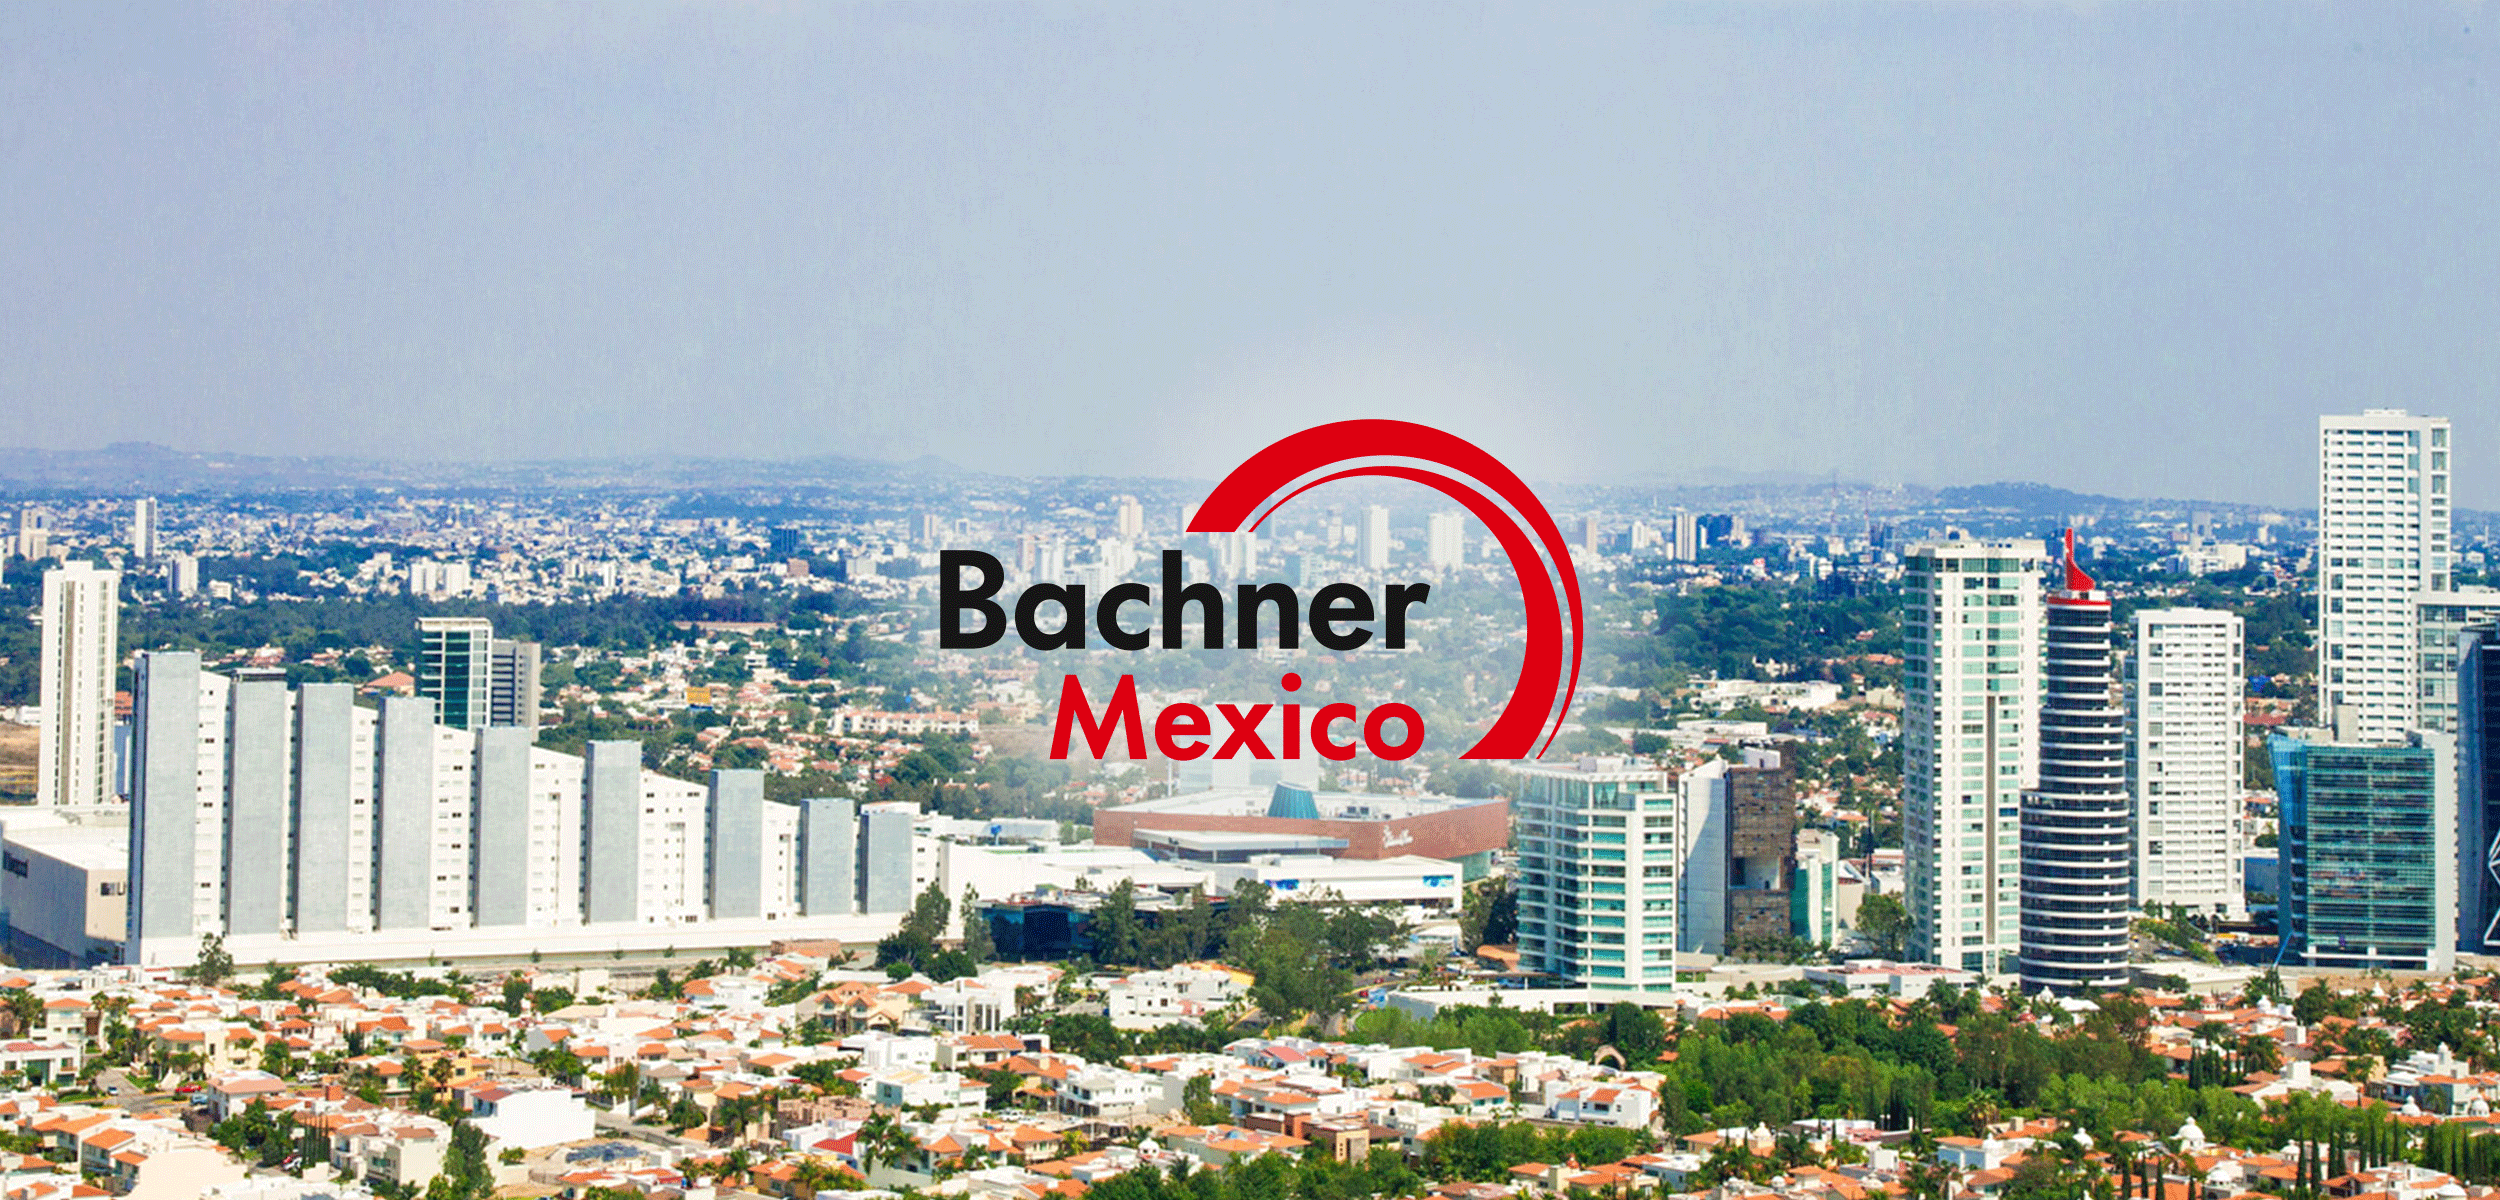 Bachner Mexico